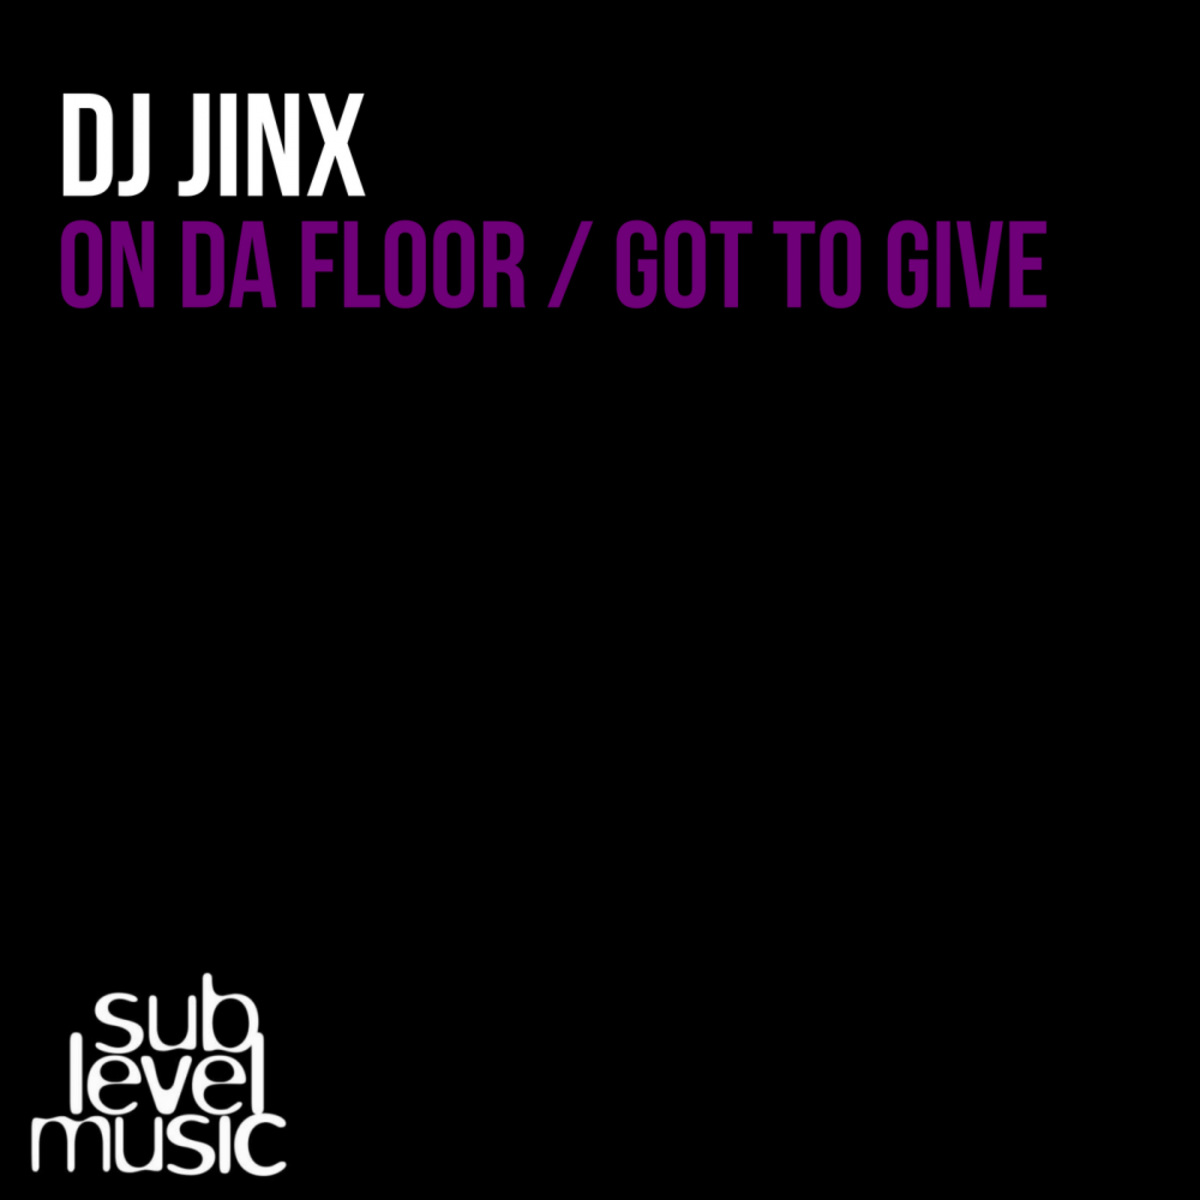 DJ Jinx - On Da Floor / Got To Give / Sub Level Music